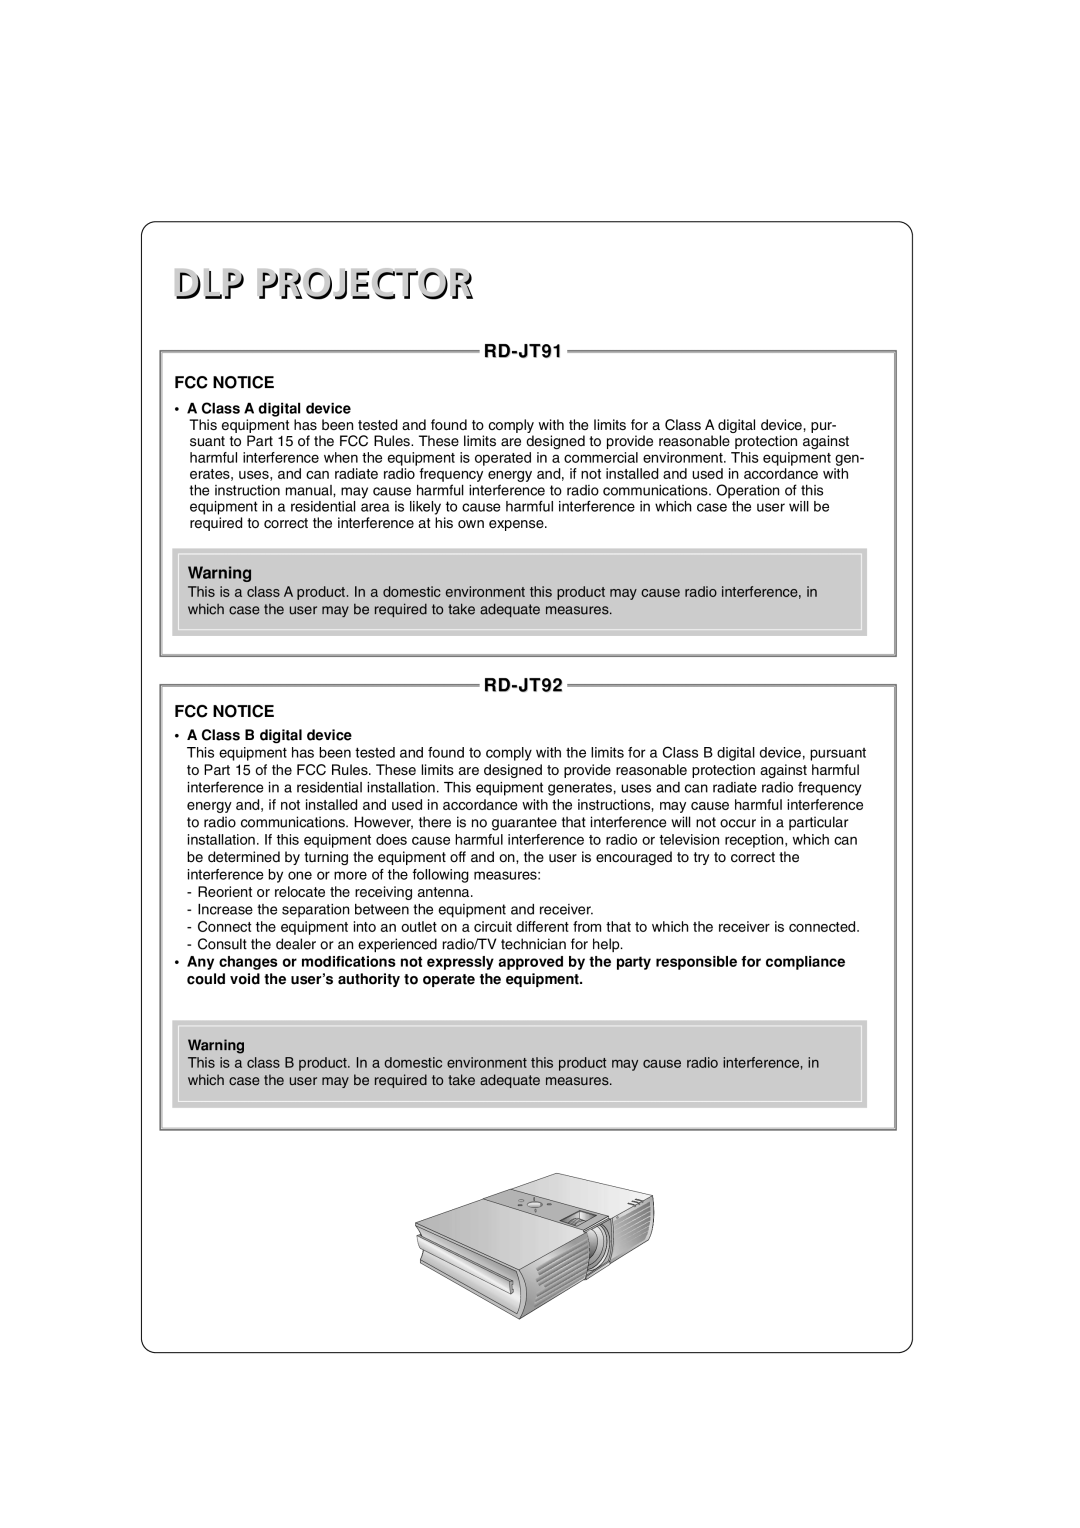 LG Electronics RD-JT92 owner manual Fcc Notice, Dlp Projector, RD-JT91 